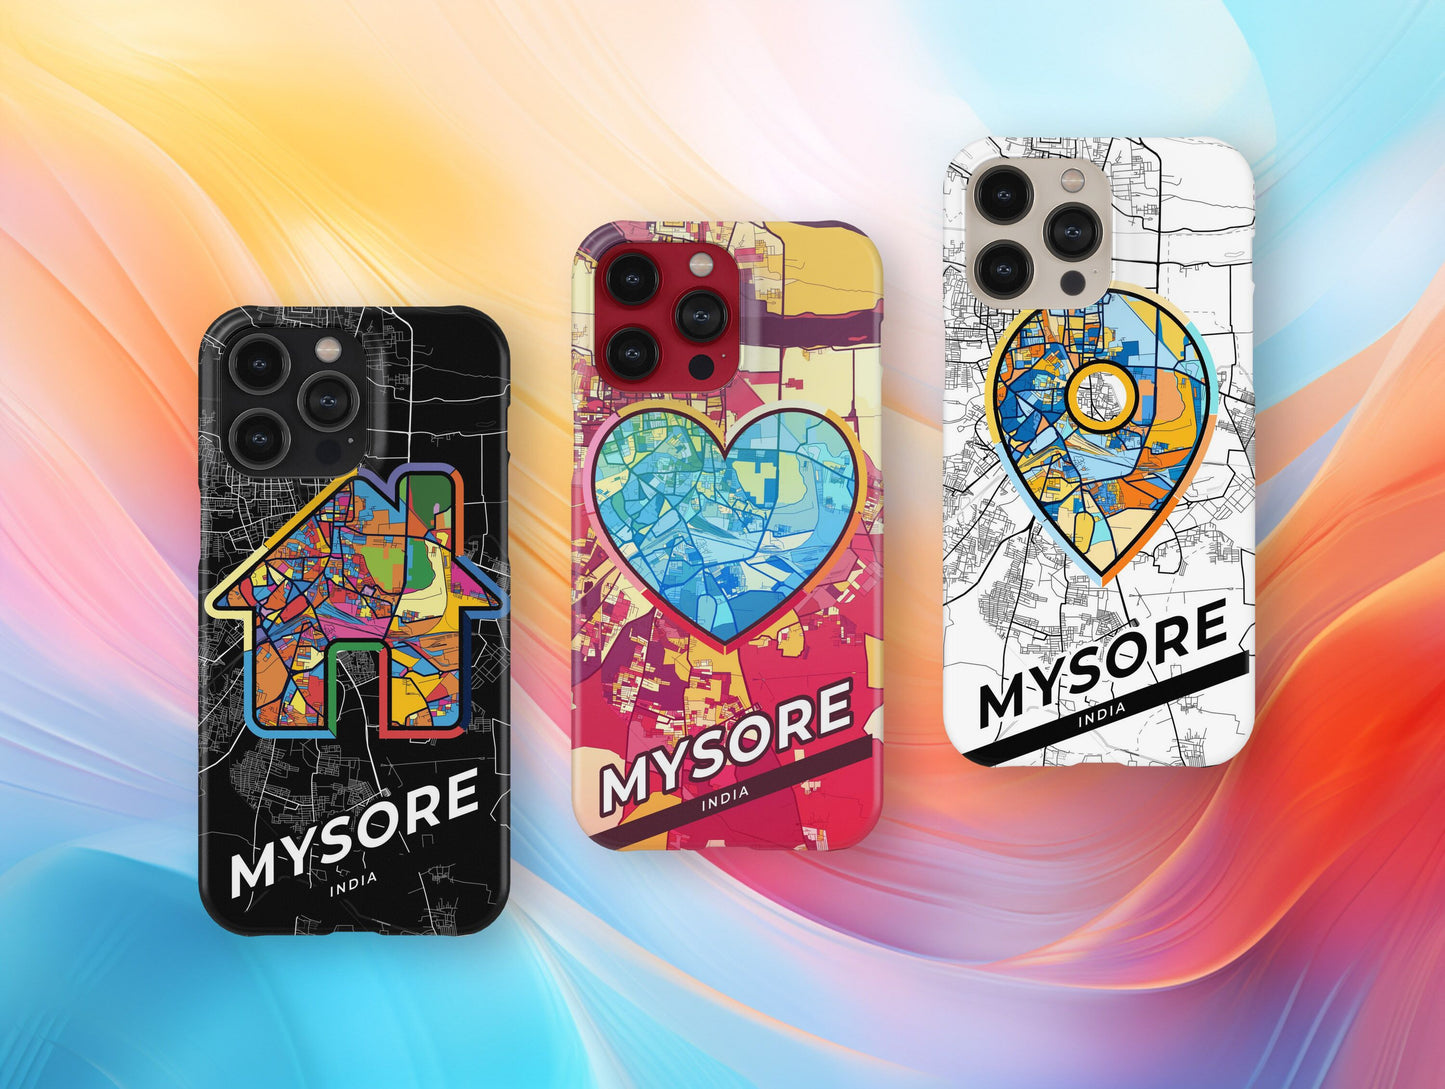 Mysore India slim phone case with colorful icon